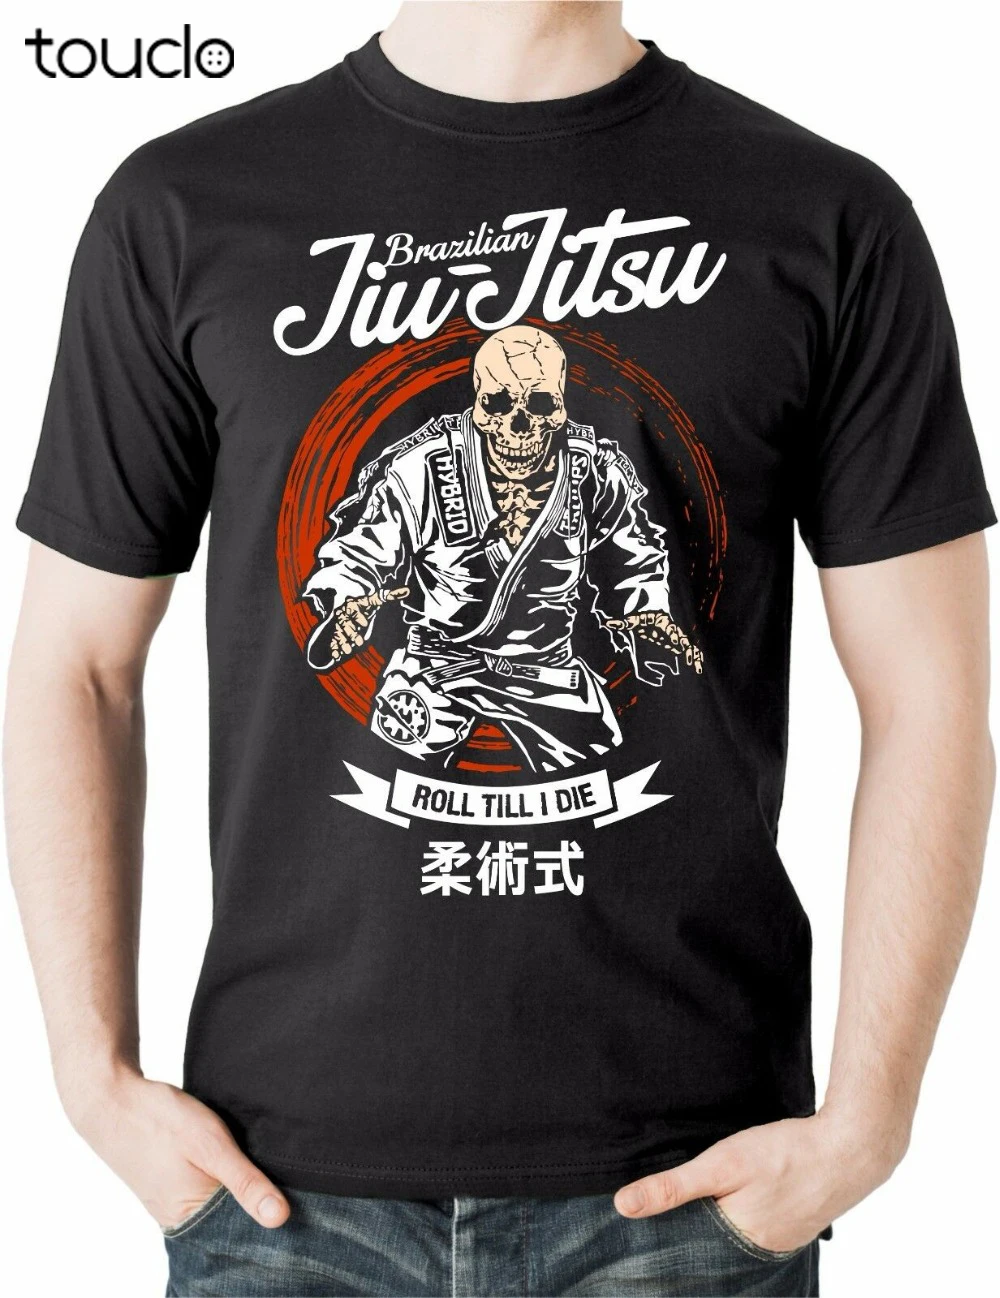 

Brazilian Jiu Jitsu Gracie Team T-Shirt Martial Arts Bjj Grappling Rio Top New Fashion Hot Fashion Brand Concert T Shirts Unisex